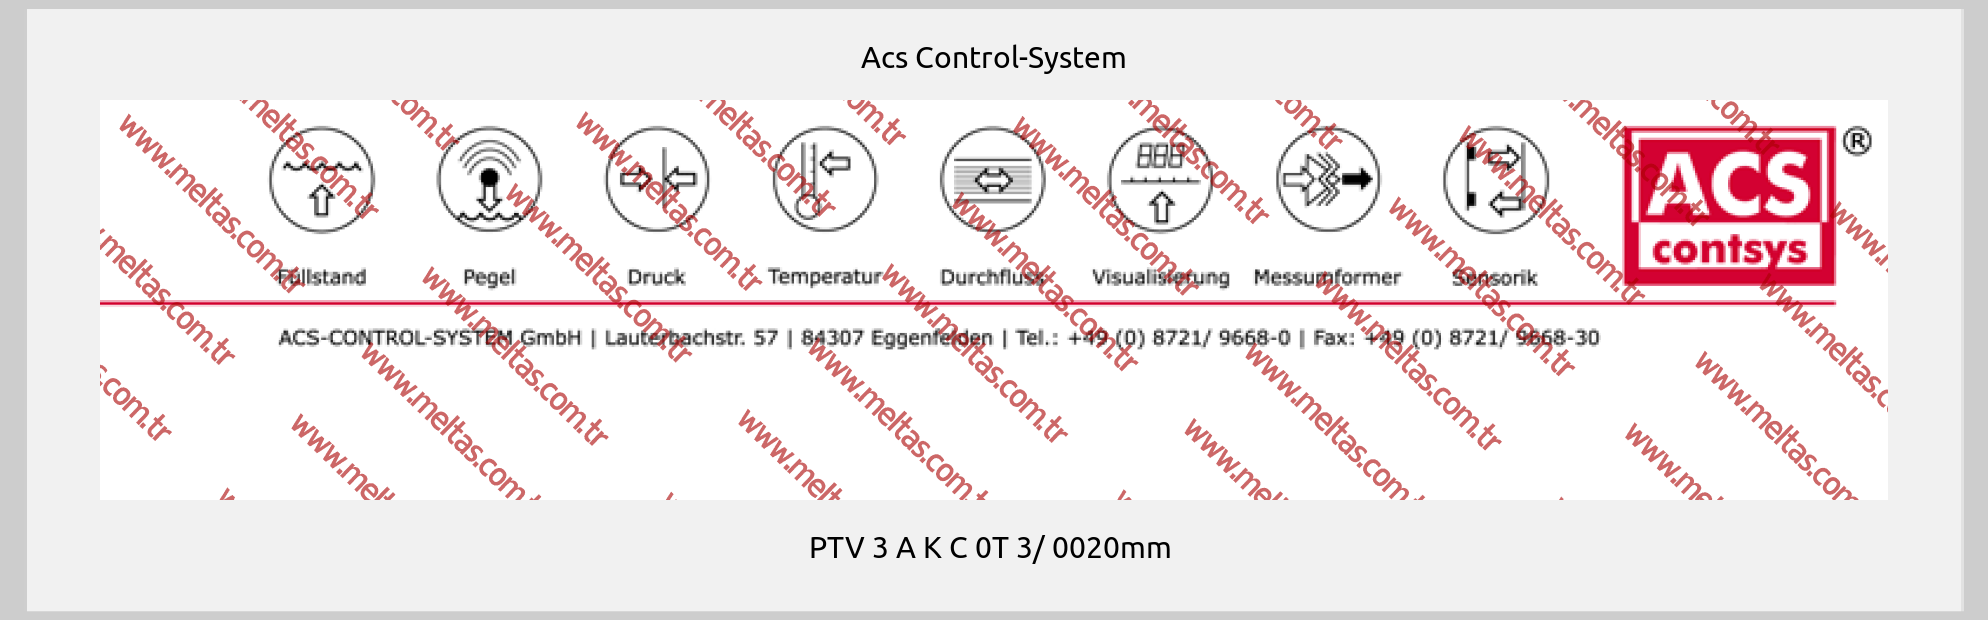 Acs Control-System - PTV 3 A K C 0T 3/ 0020mm 